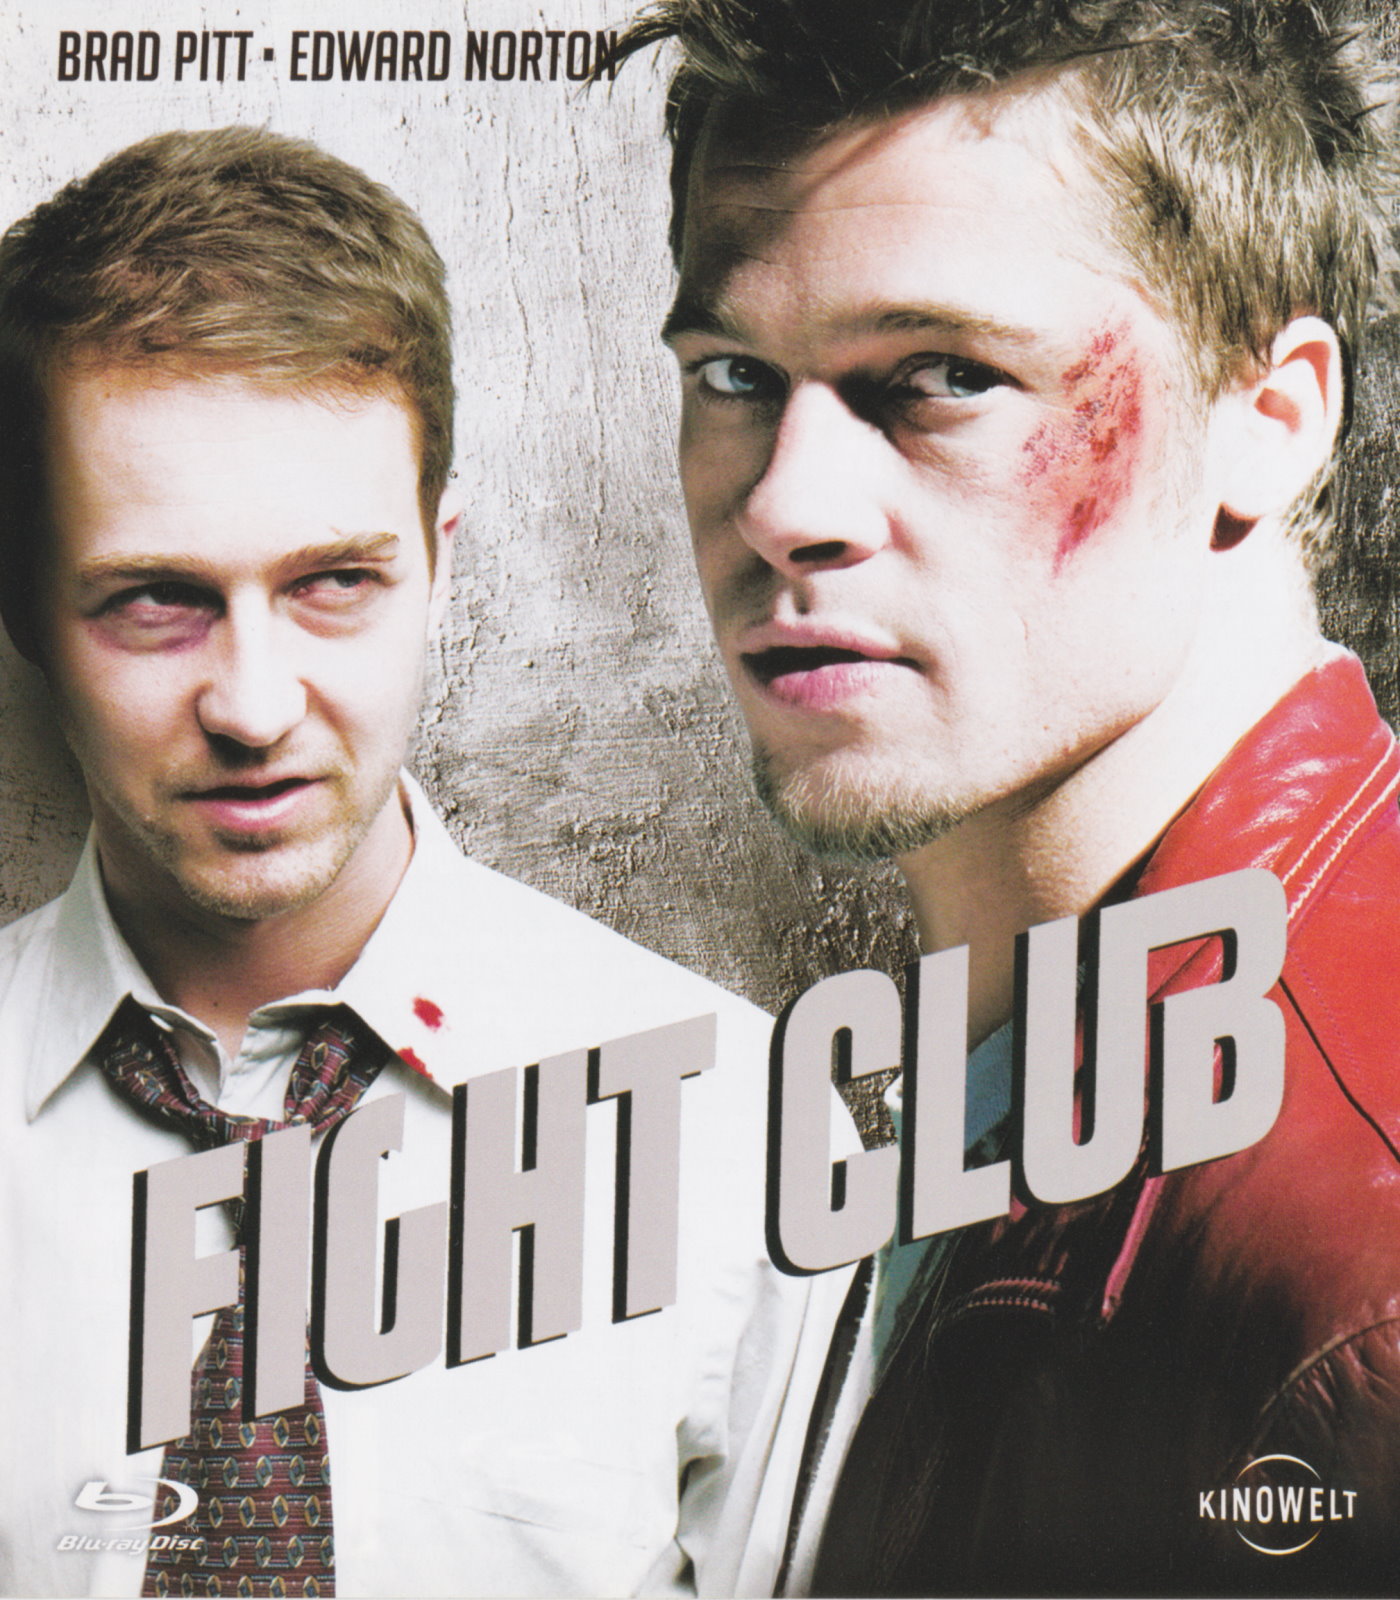 Cover - Fight Club.jpg